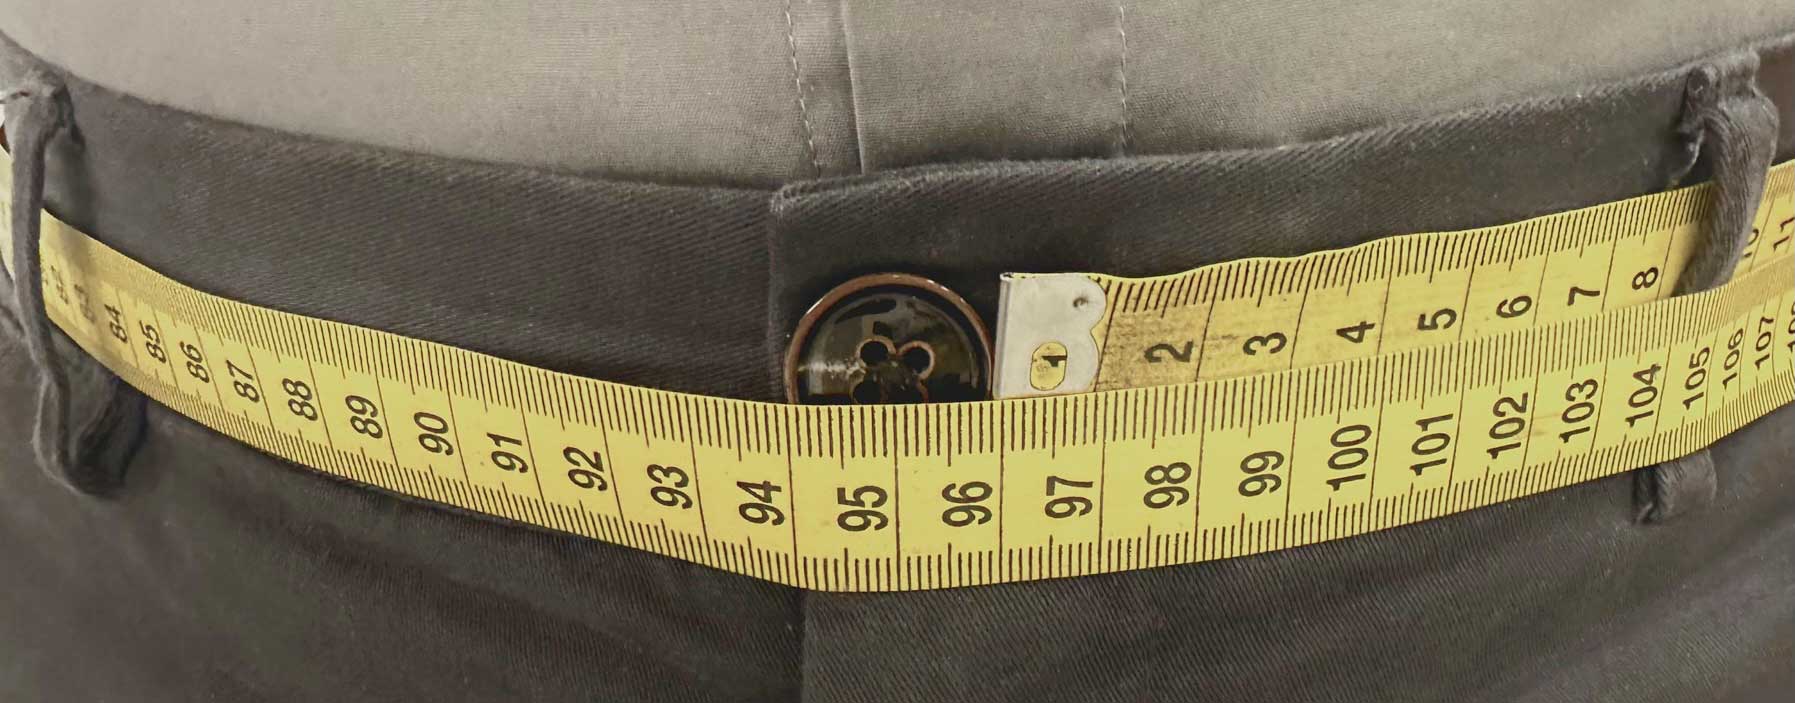 Belt Sizing Measurement Through Loops of pants